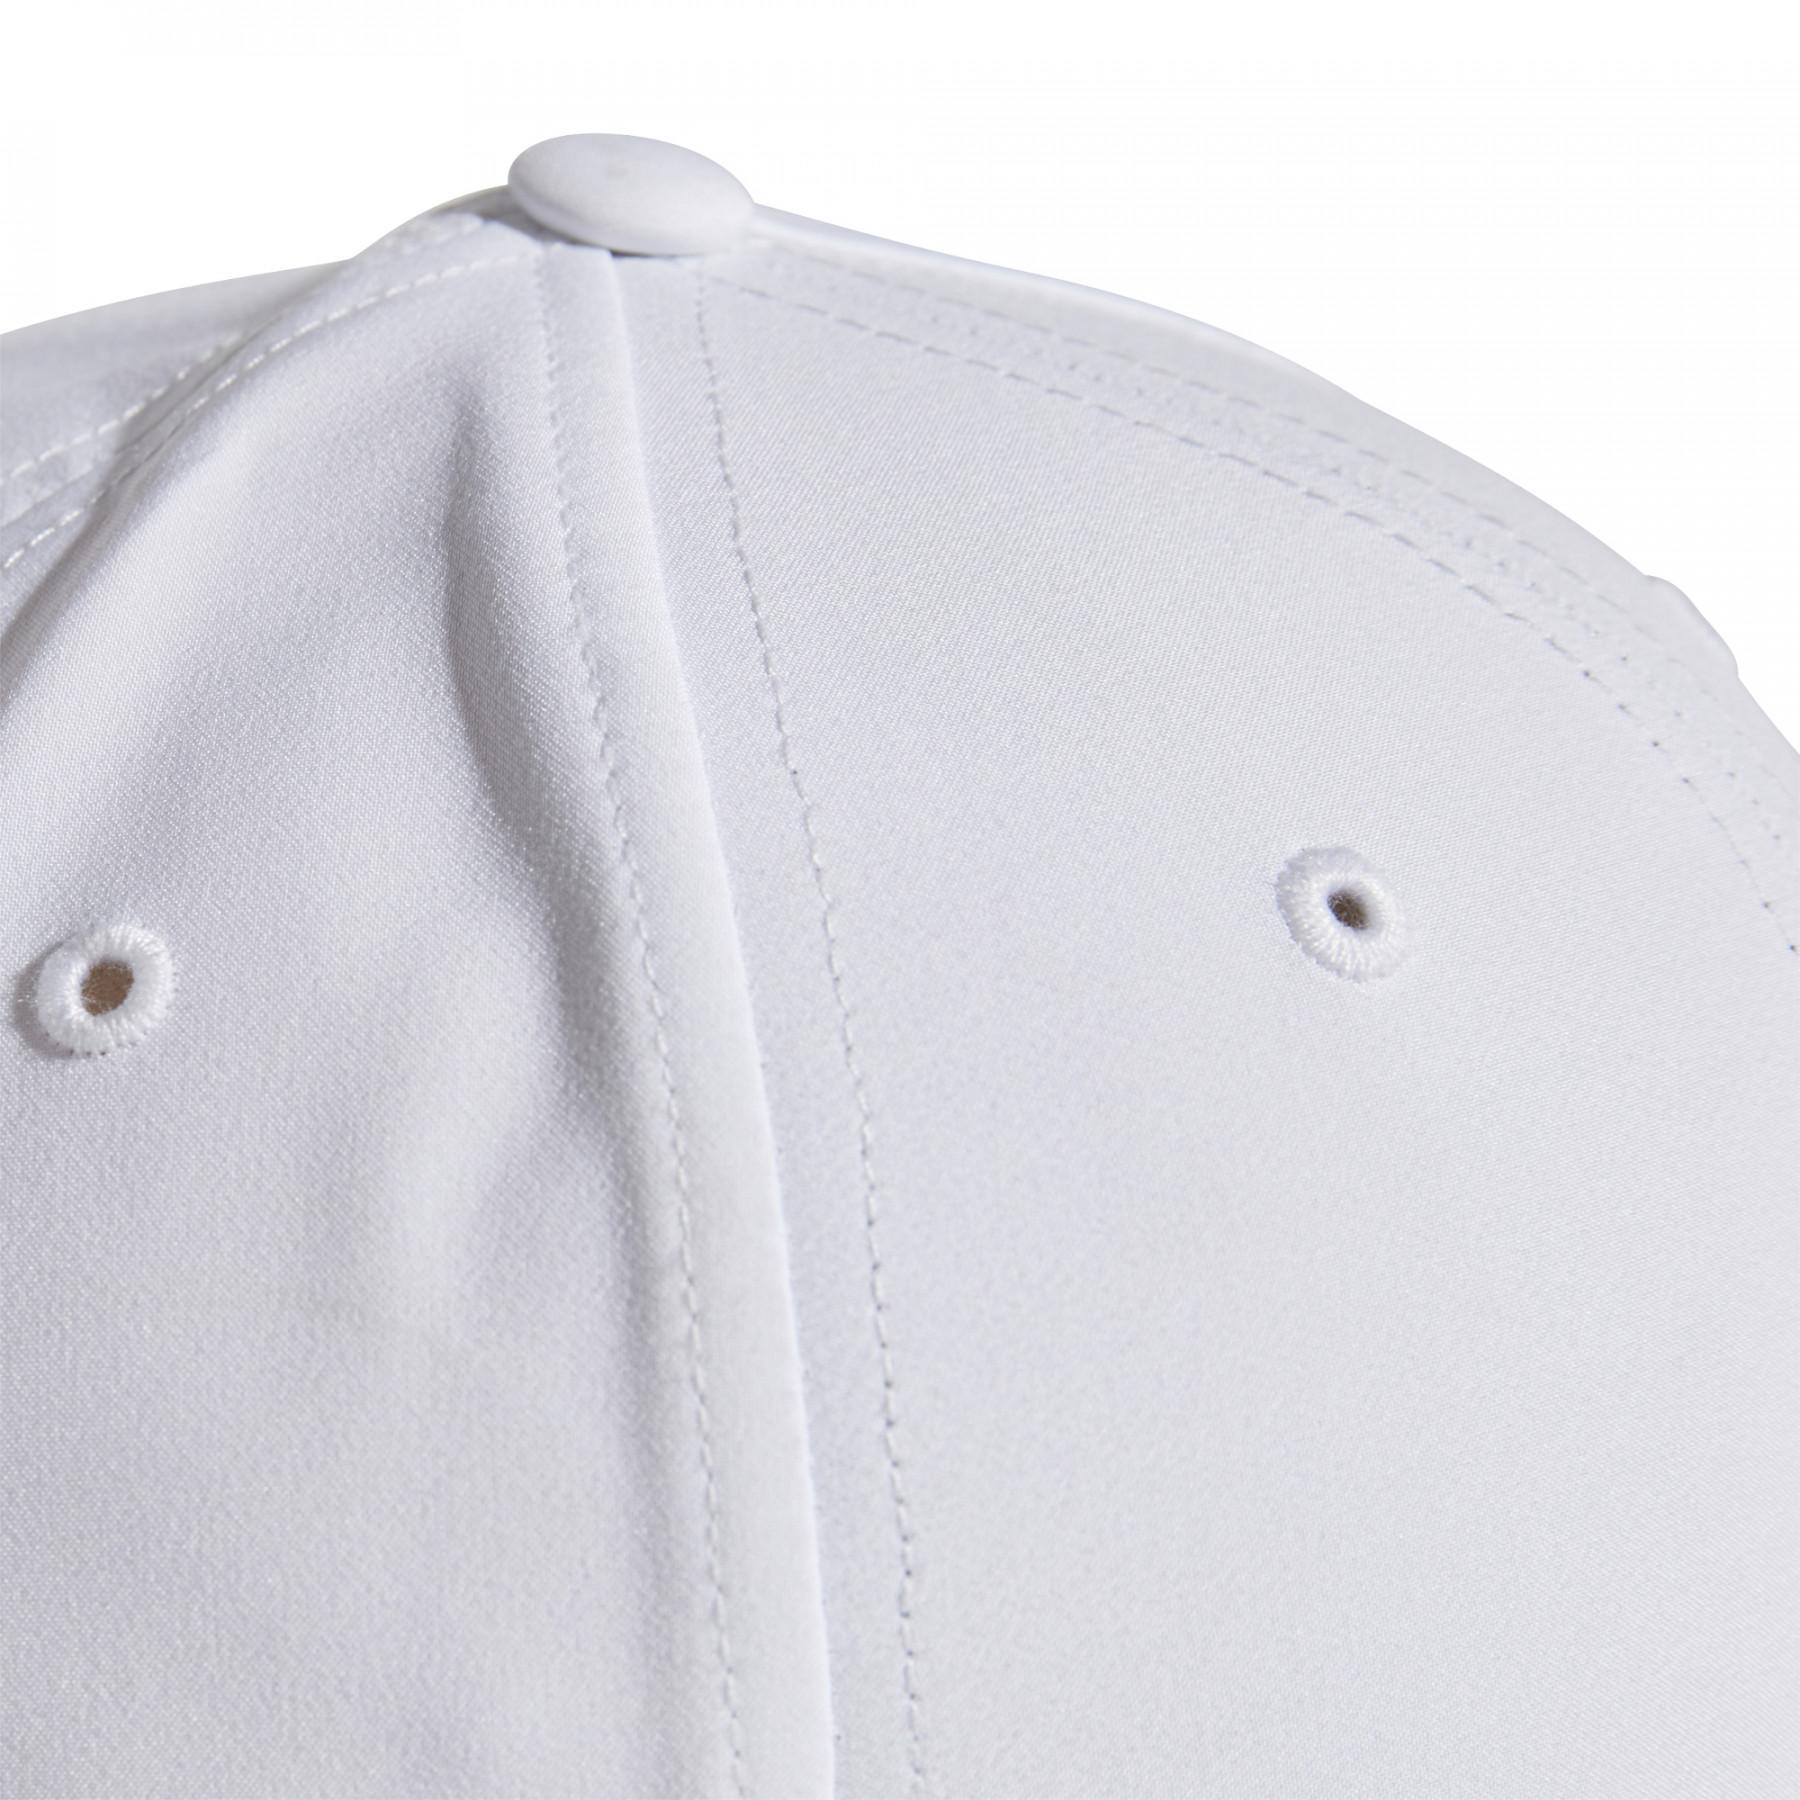 Embroidered light baseball cap adidas